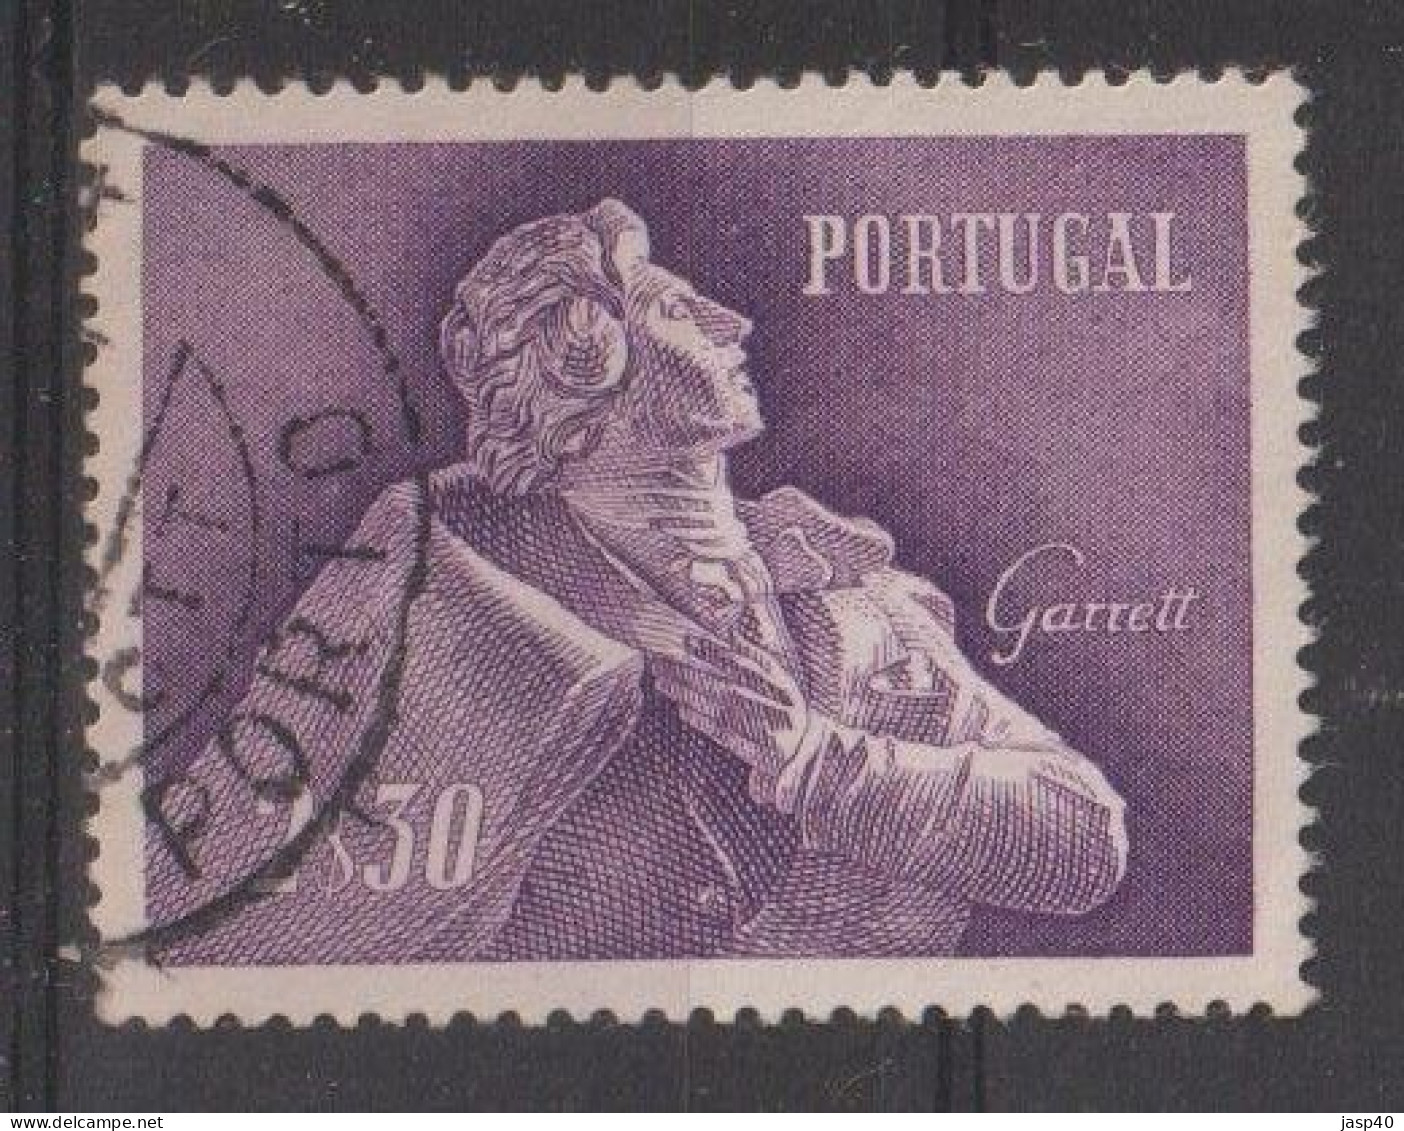 PORTUGAL 828 - POSTMARKS OF PORTUGAL - PORTO - Usado